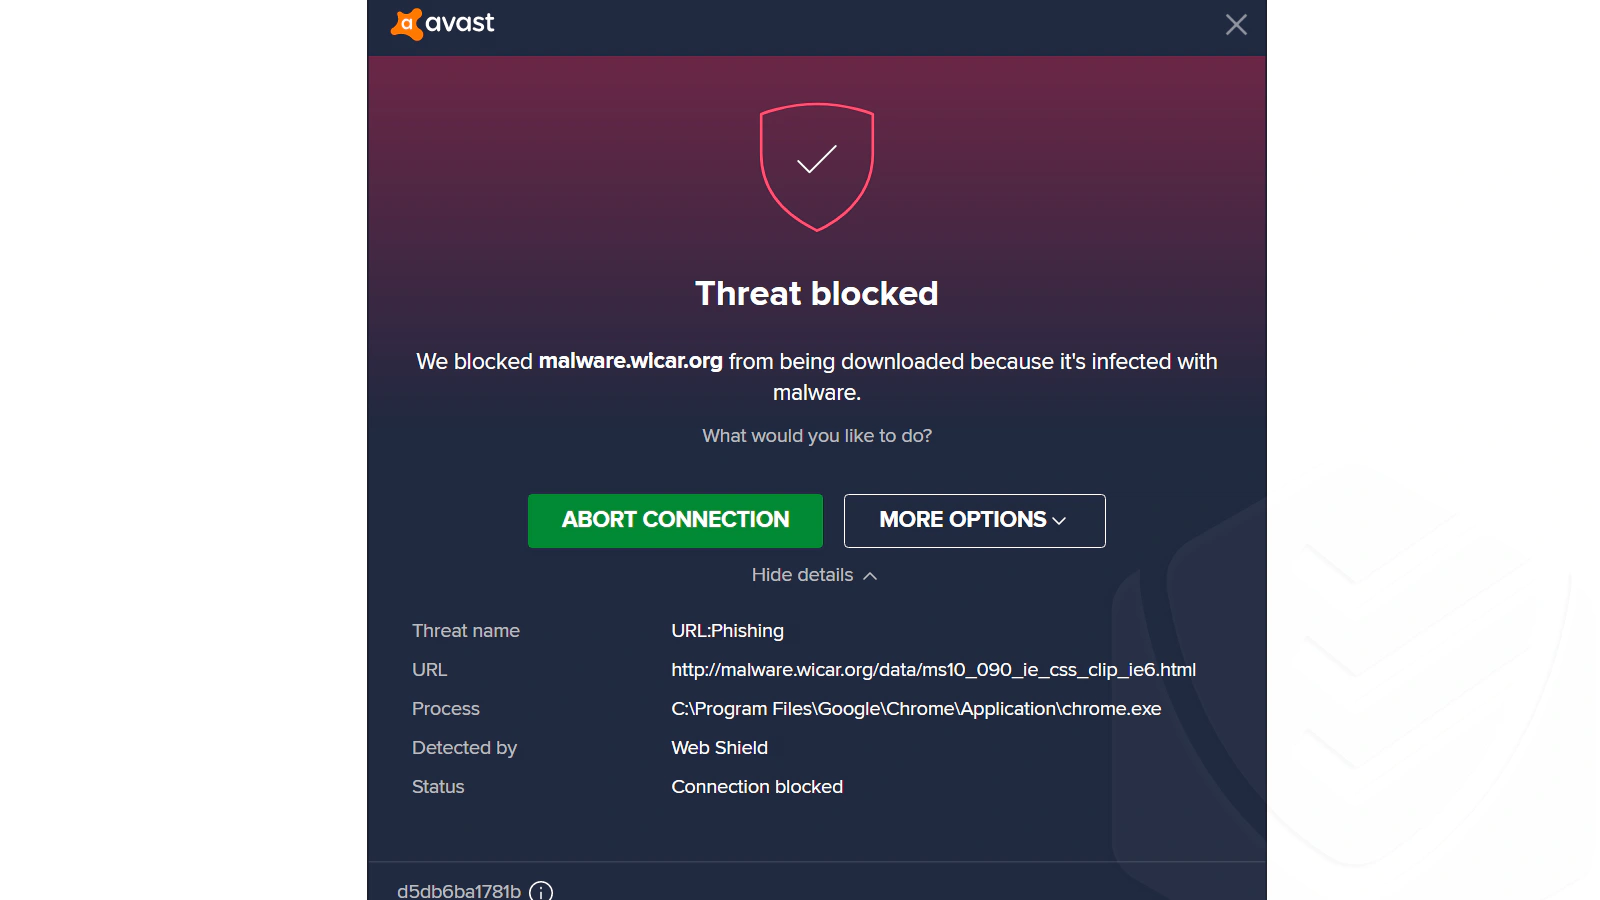 
Avast blockierte wicar.org